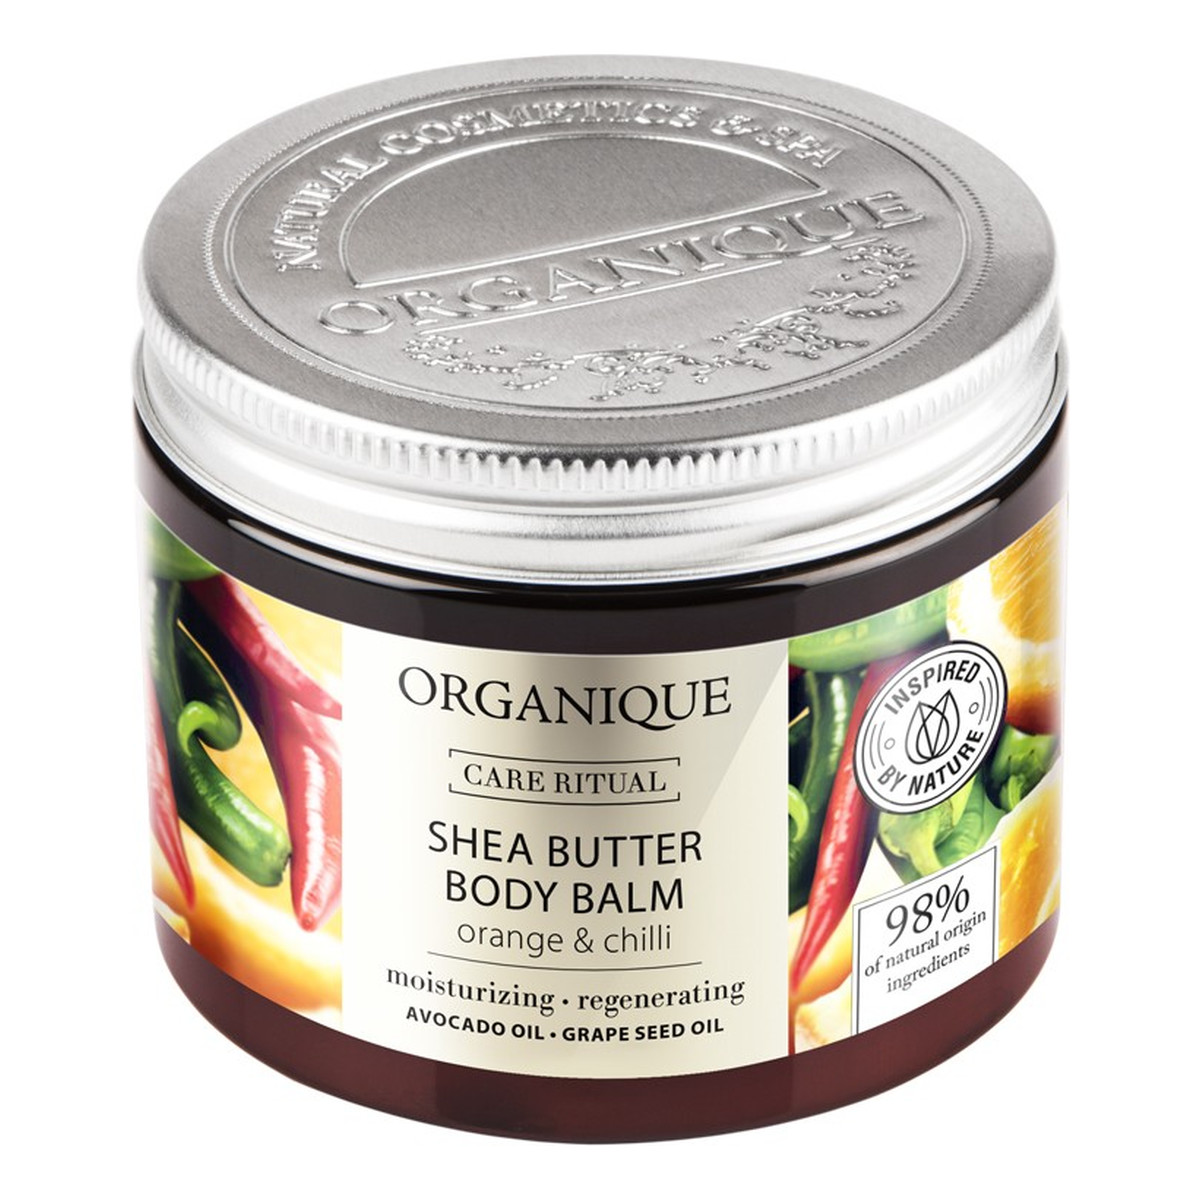 Organique Care ritual Balsam do ciała z masłem shea-orange & chilli 200ml